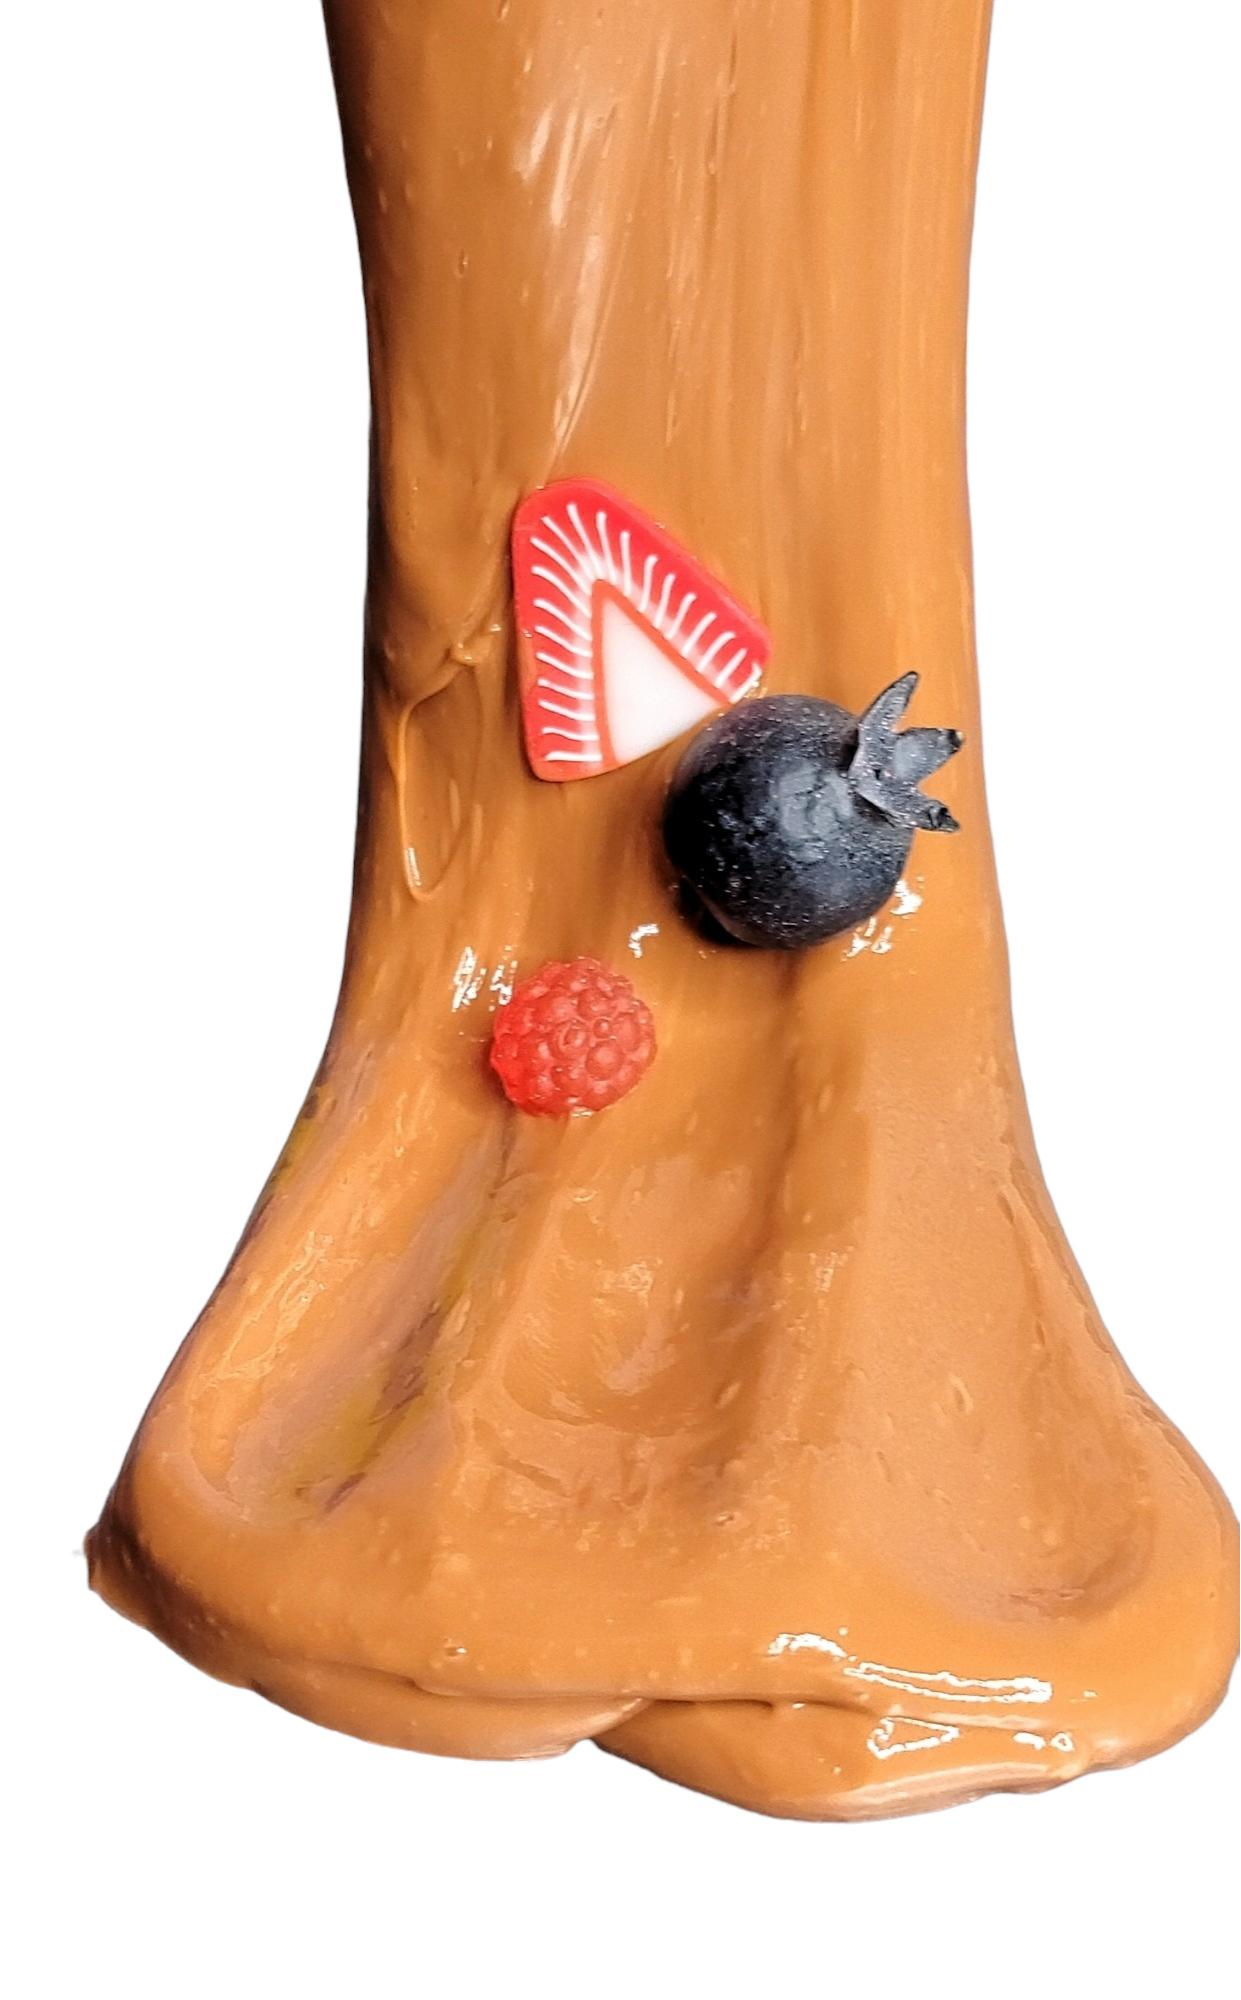 Chocolate Hazelnut Berry Toast DIY Handmade Slime Kit Slime by Hoshimi Slimes LLC | Hoshimi Slimes LLC